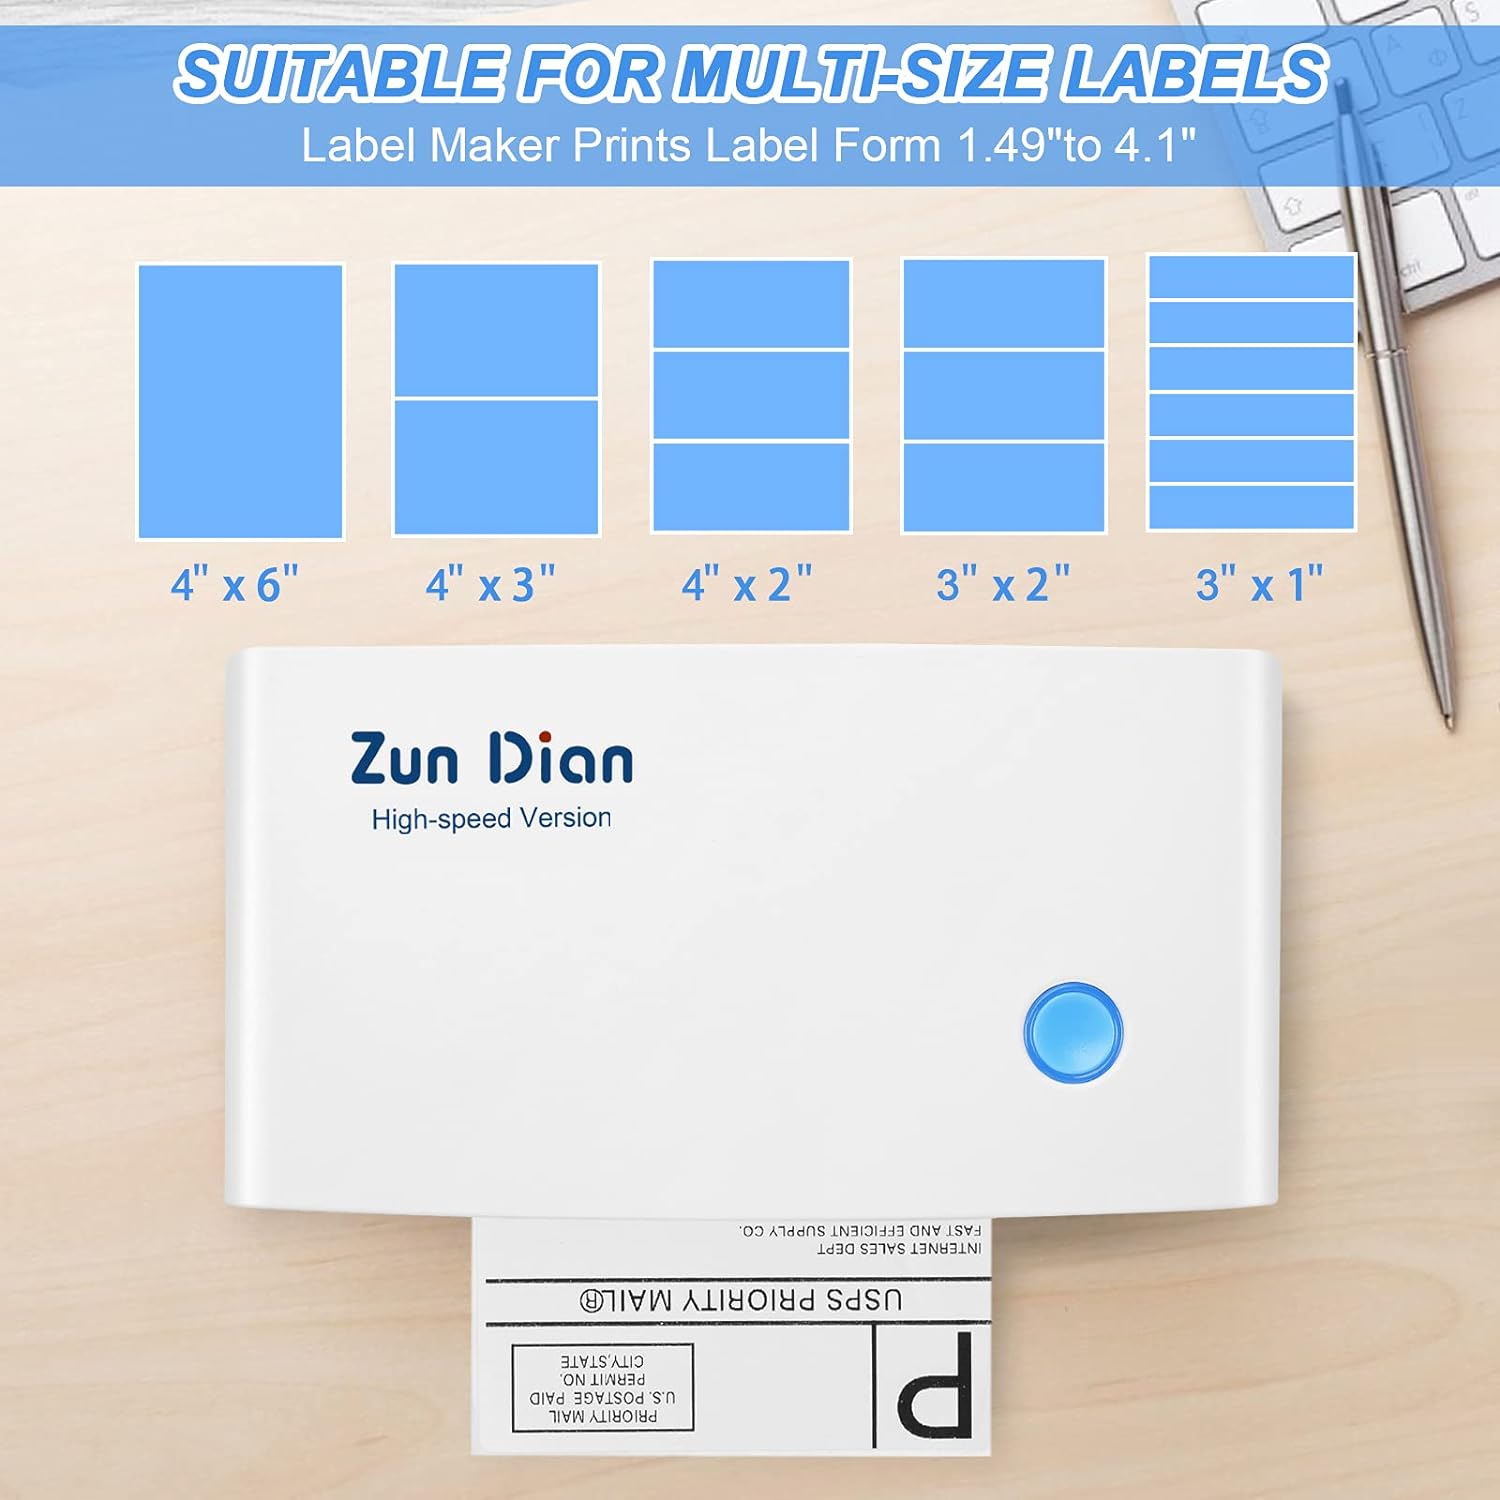 Assessment of ZunDian Thermal Label Printer